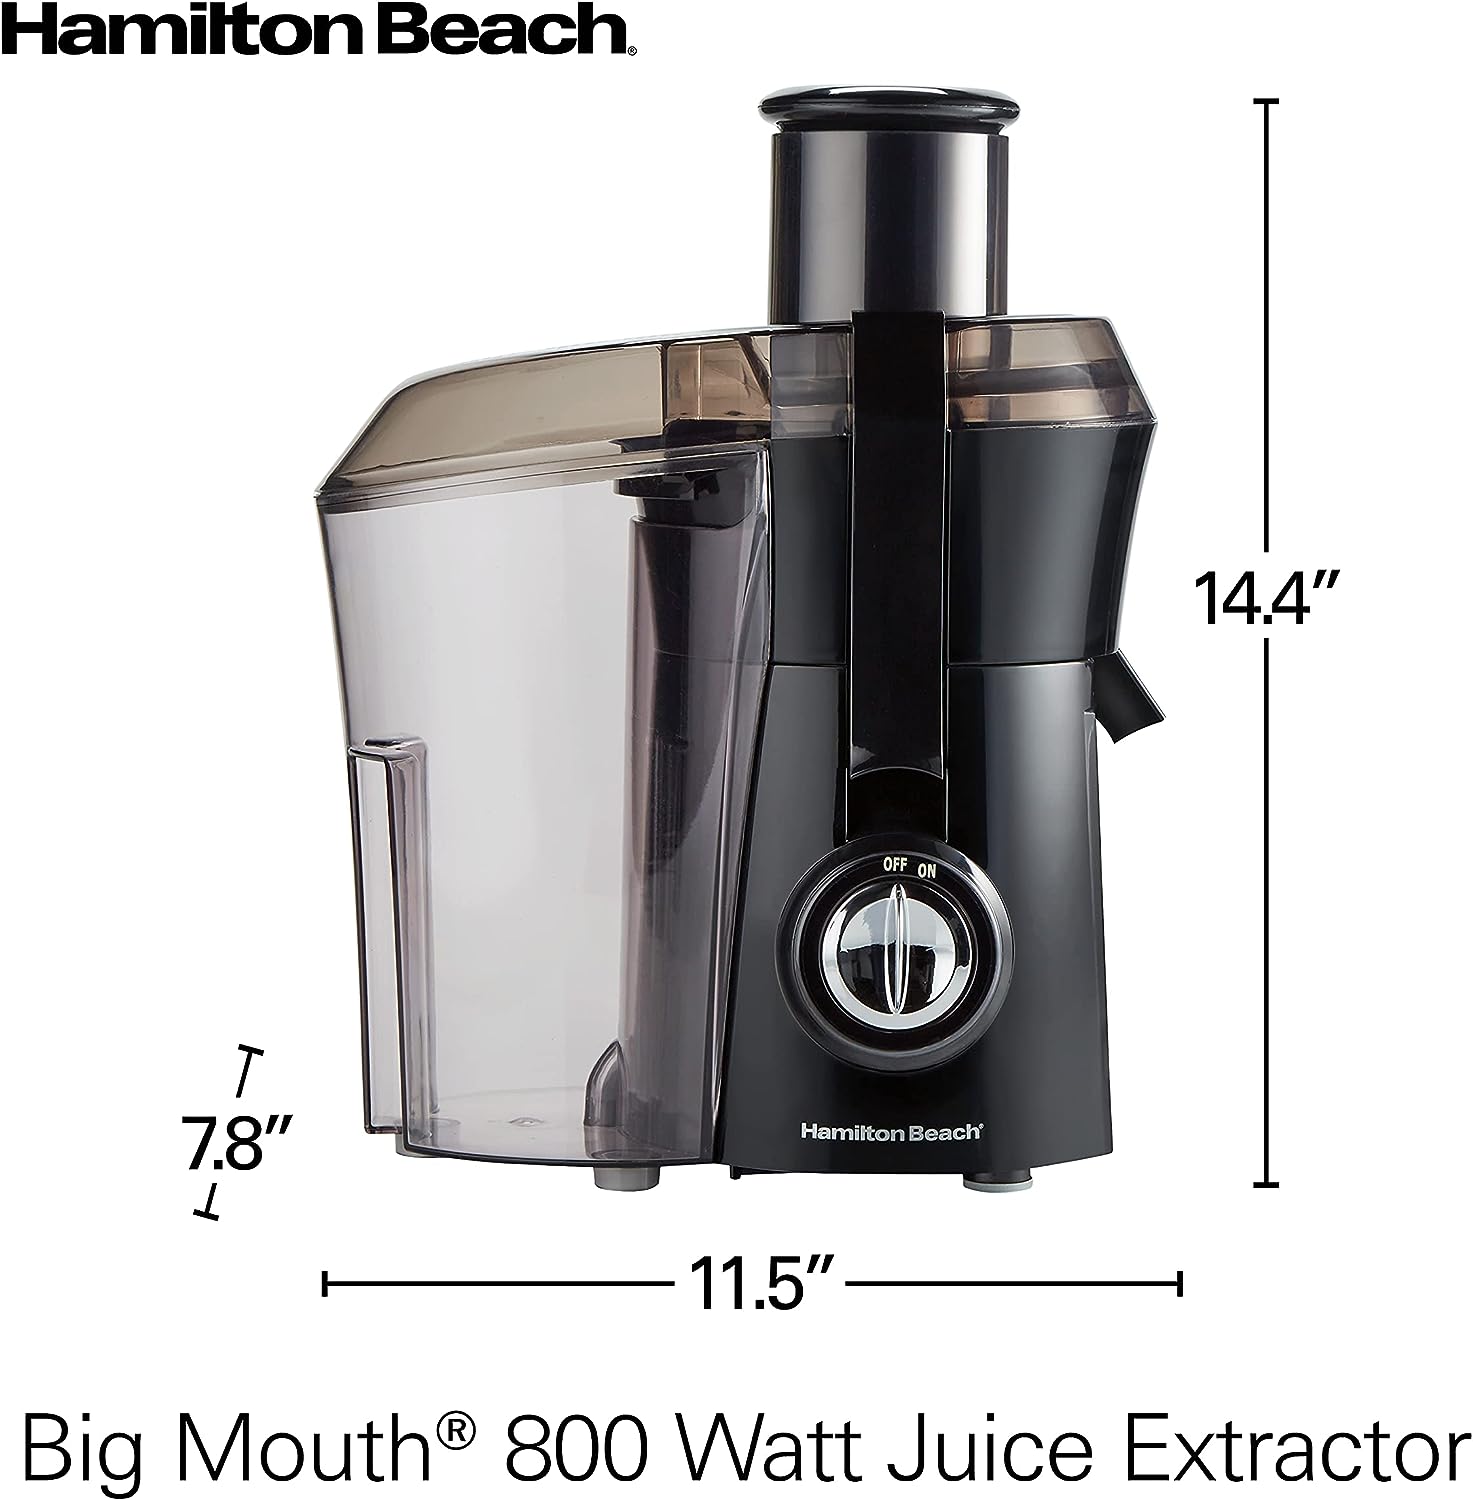 Hamilton Beach Big Mouth Juice Extractor - 800W